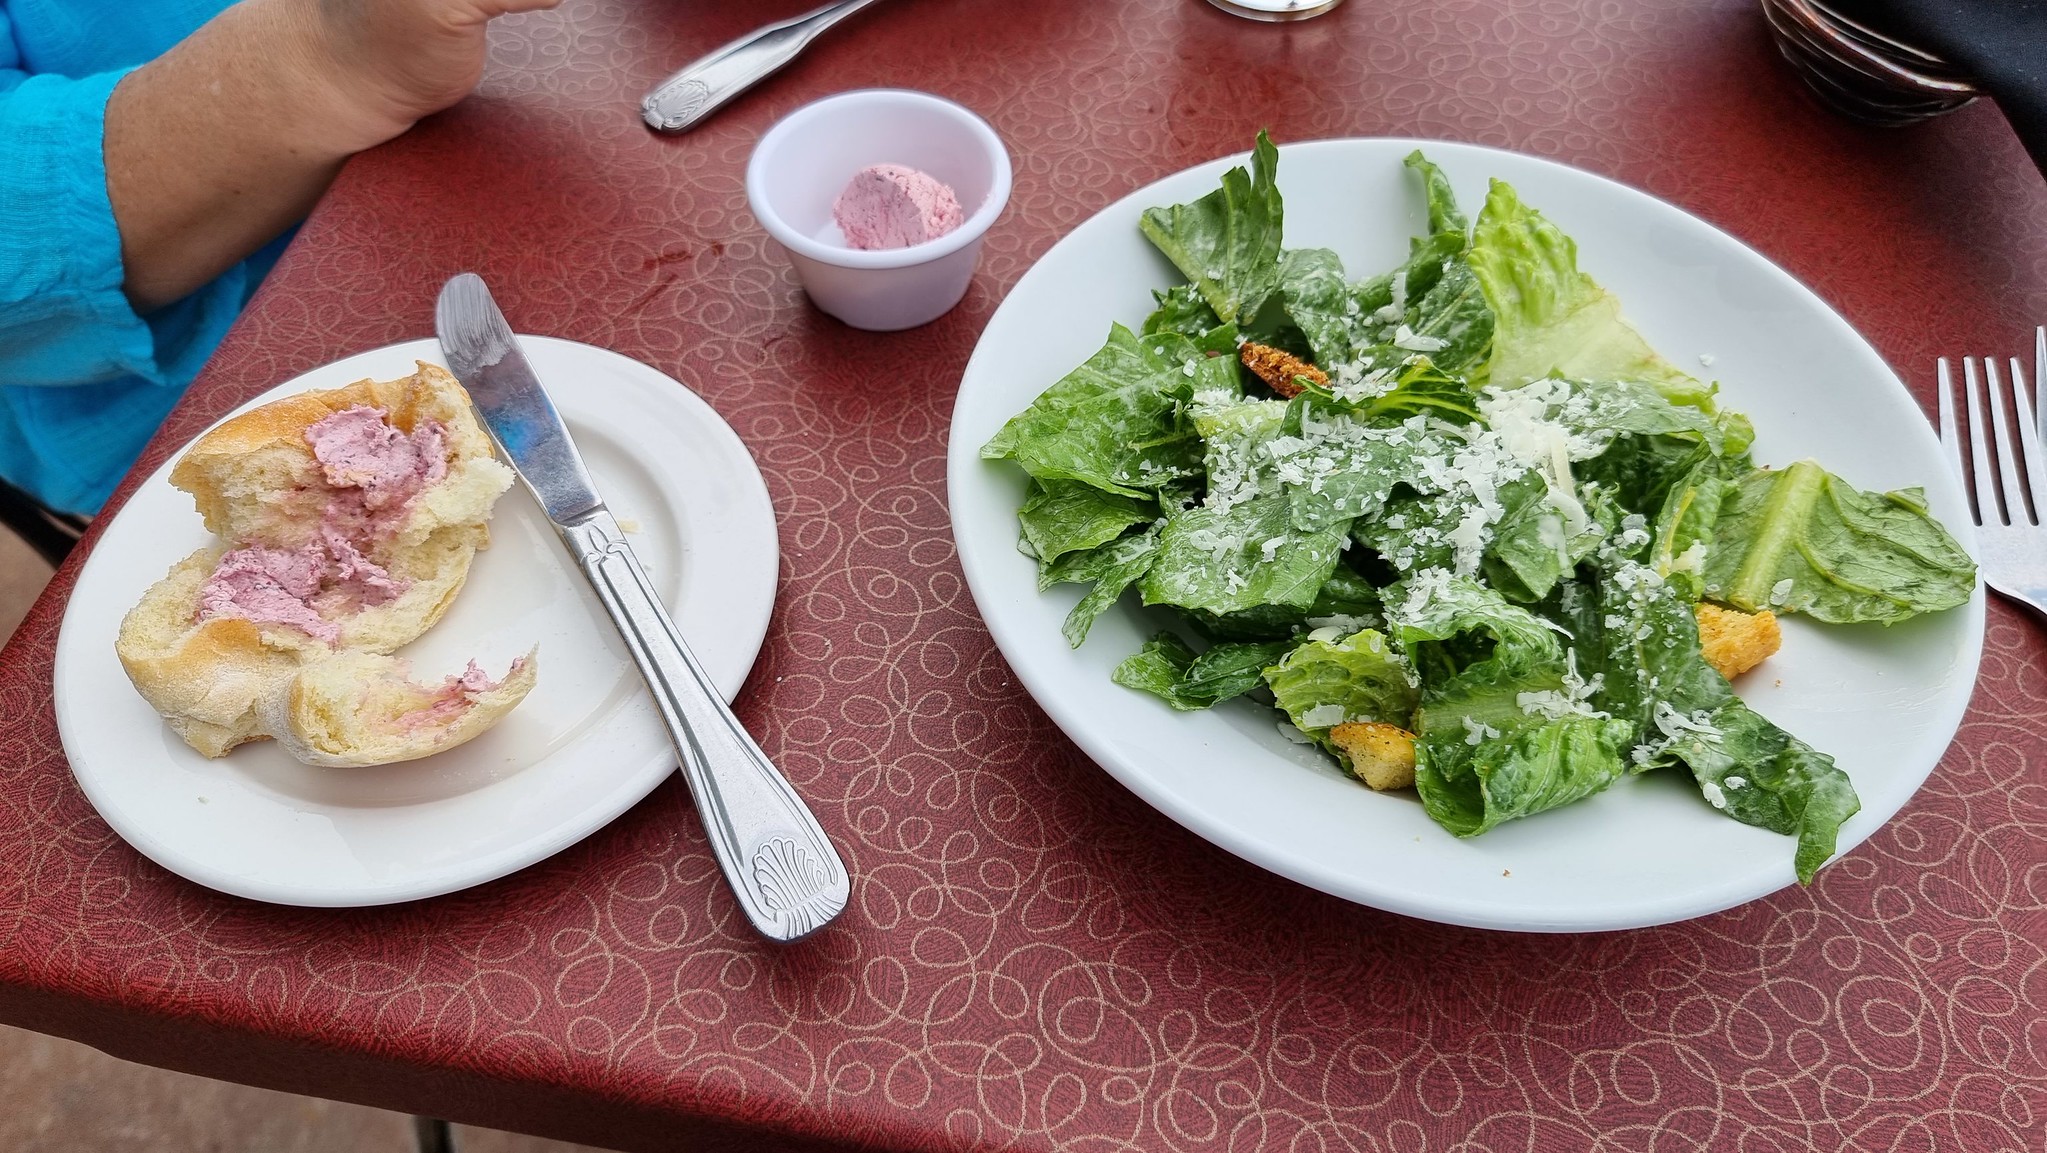 Caesar salad started served up at Elevation 486 at Twin Falls